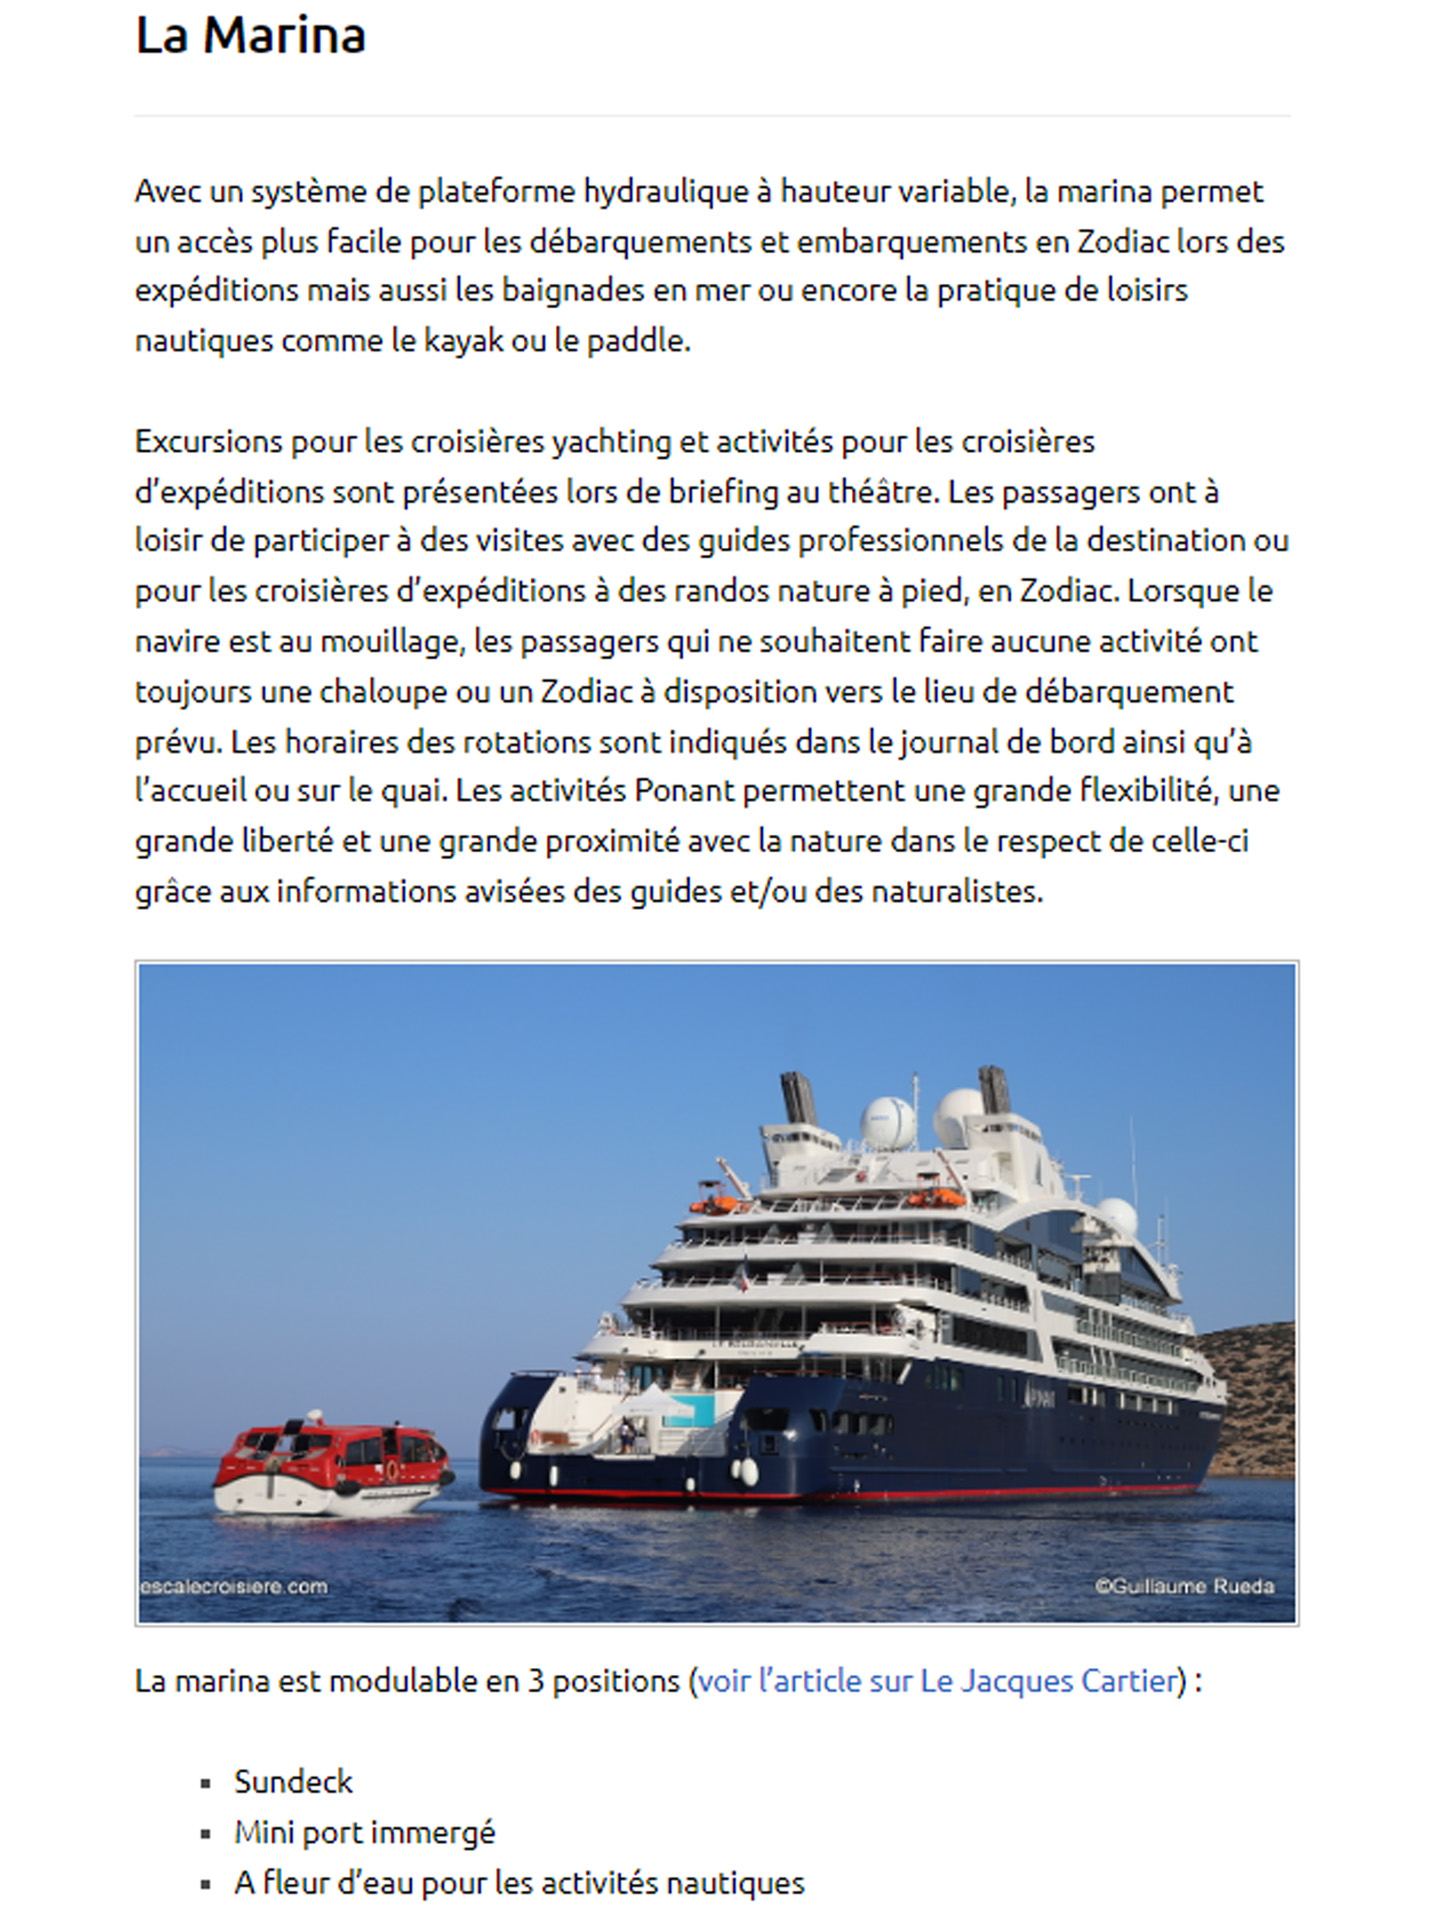 Article on Le Bougainville du Ponant designed by jean-Philippe Nuel studio in the magazine escale croisière, luxury cruise ship, interior design